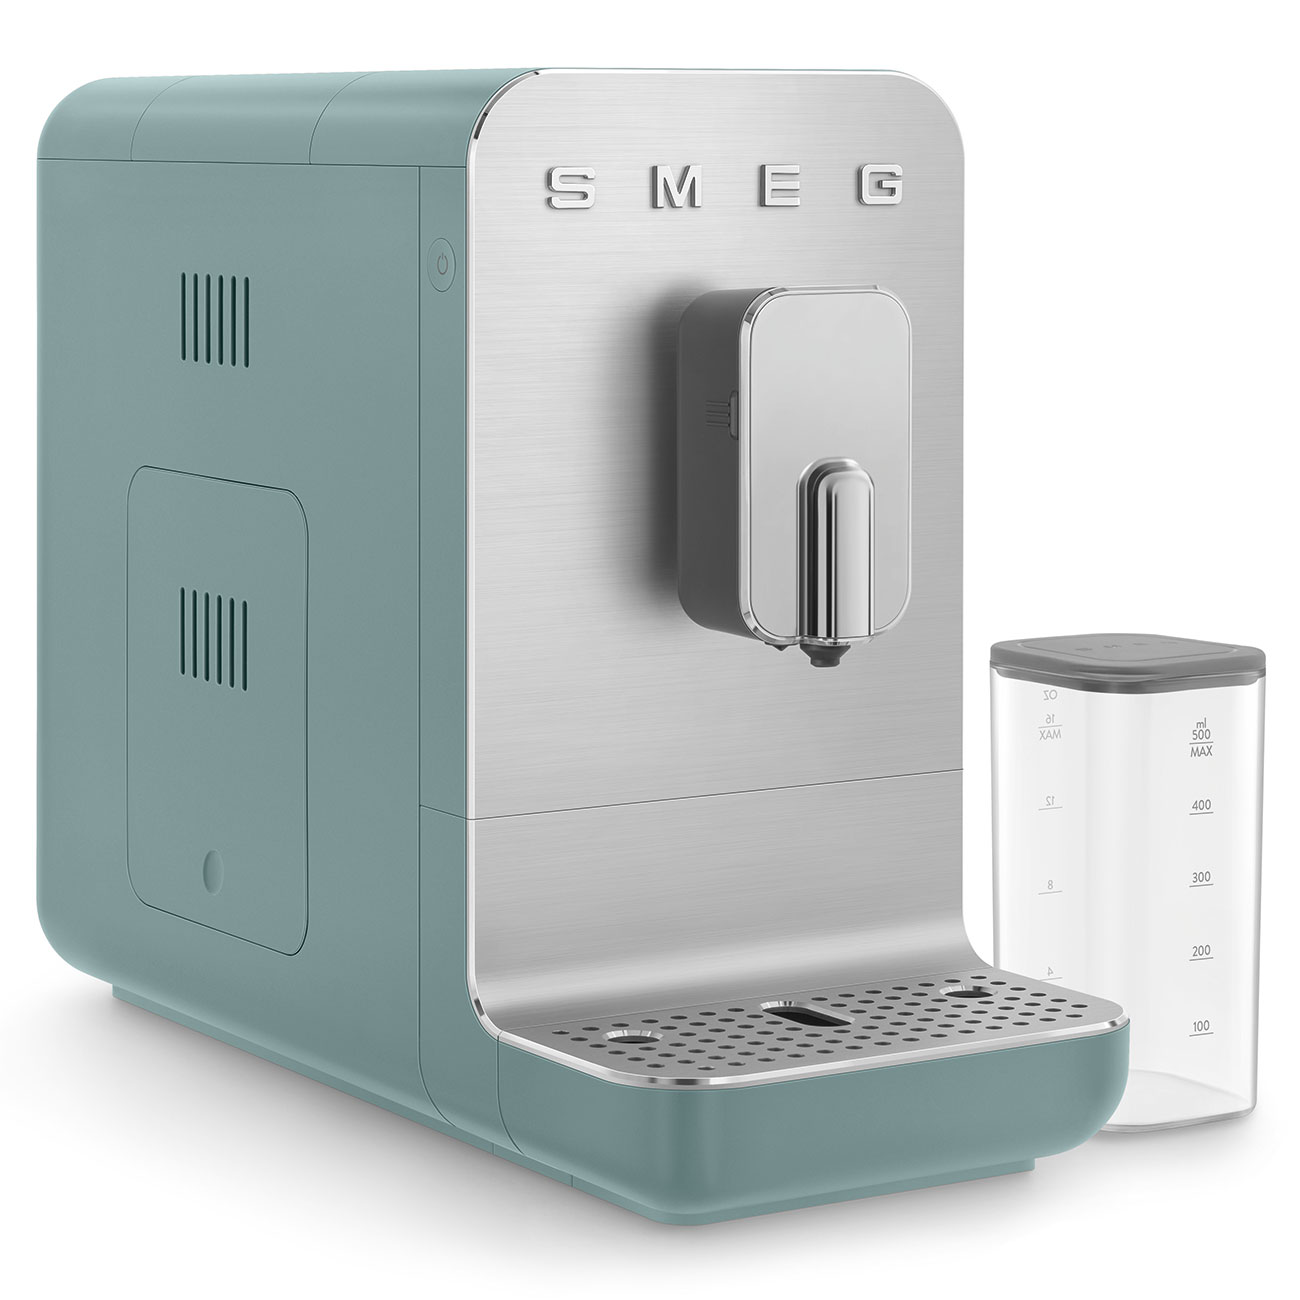 Smeg Emerald Green Espresso Automatic Coffee Machine with integrated milk system_3